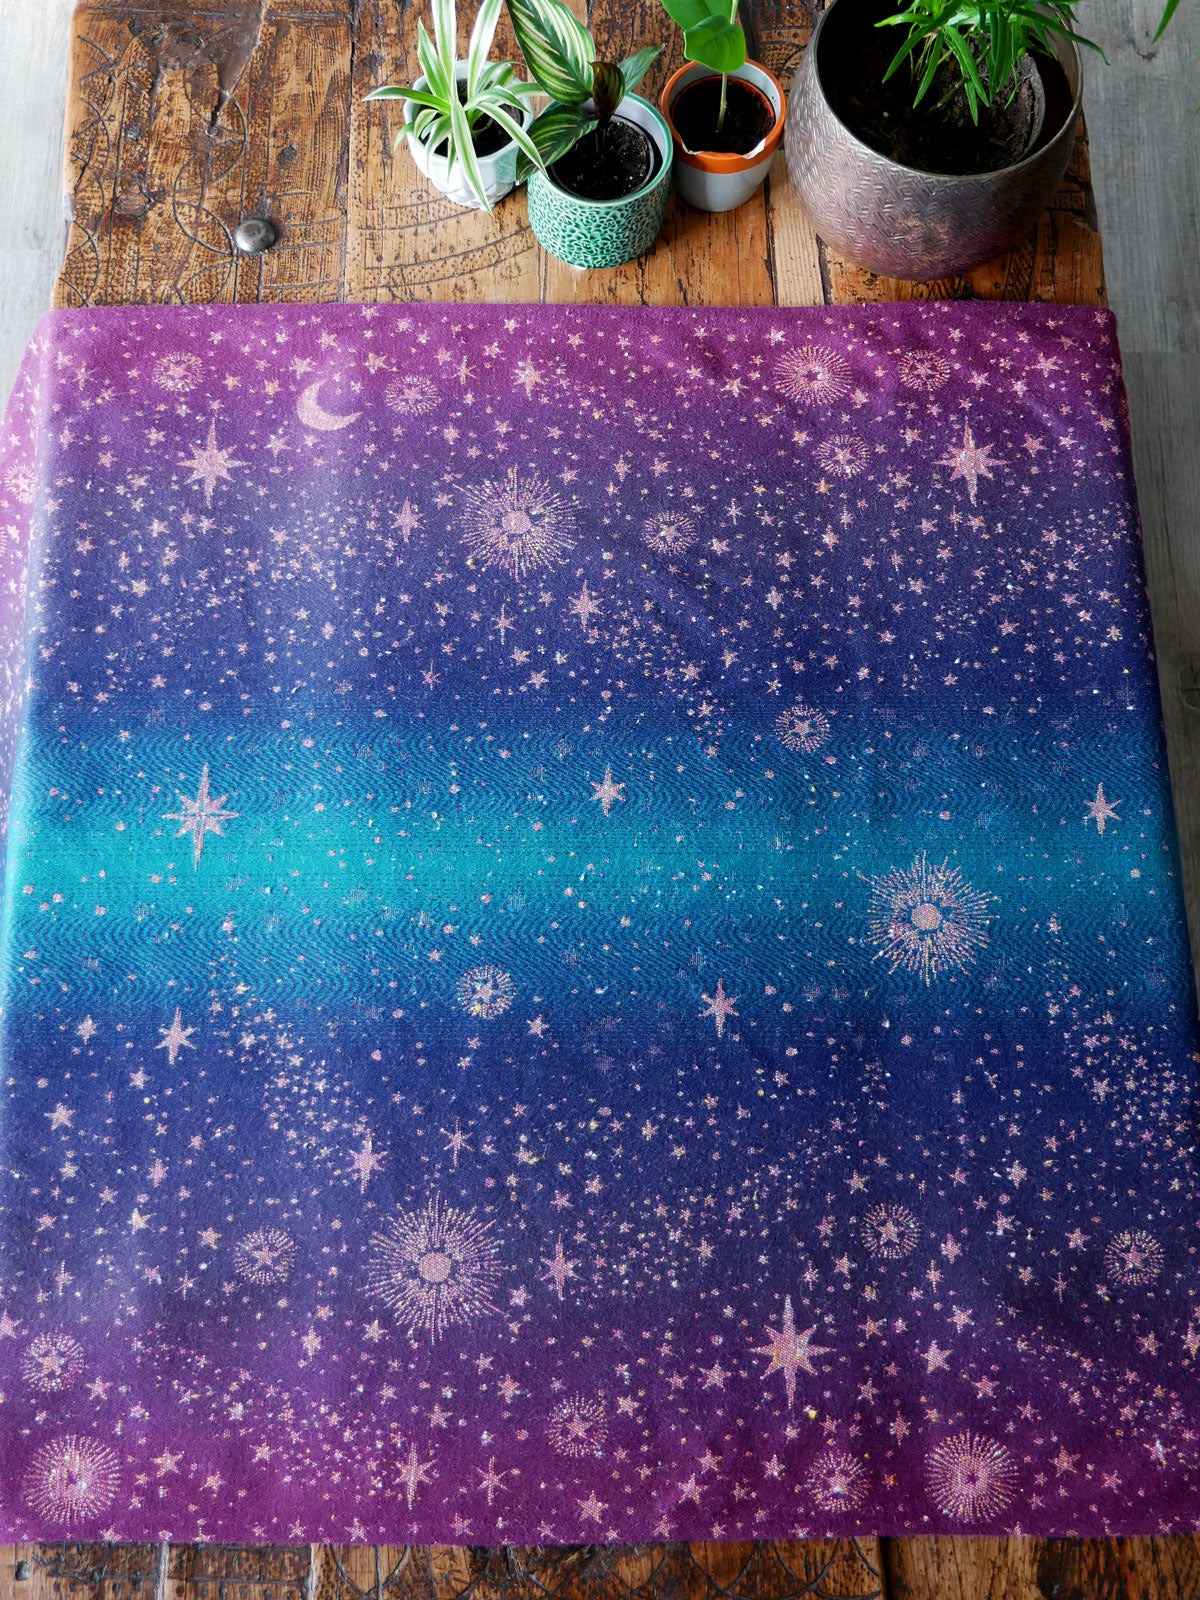 Constellation Zodiac Fabric Pieces